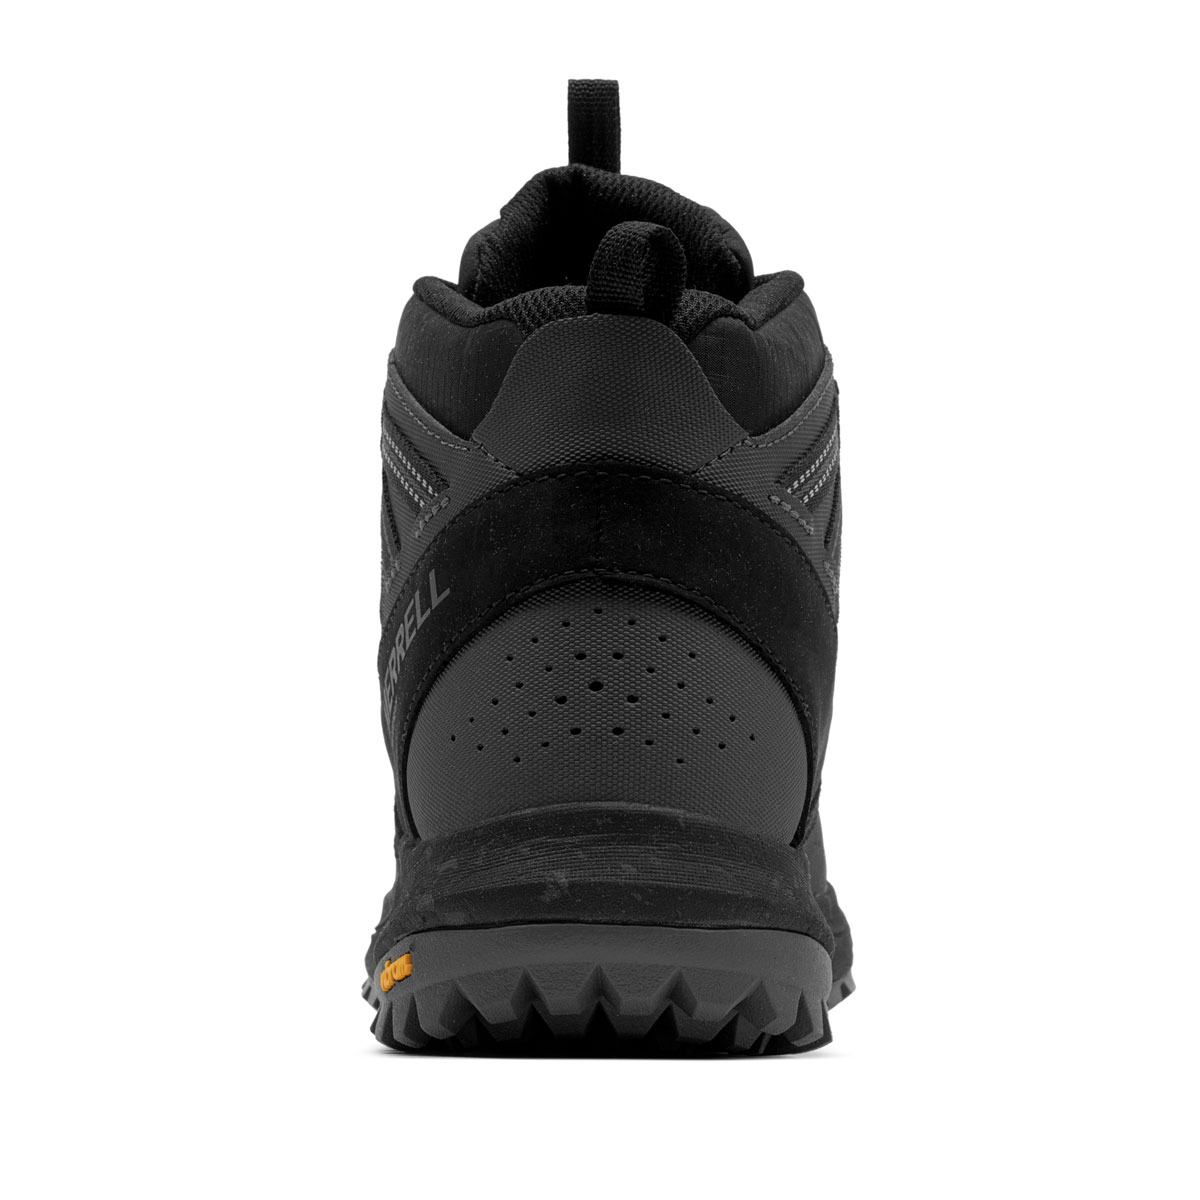 Merrell Nova Sneaker Boot Bungee WaterProof Мъжки зимни обувки J067109